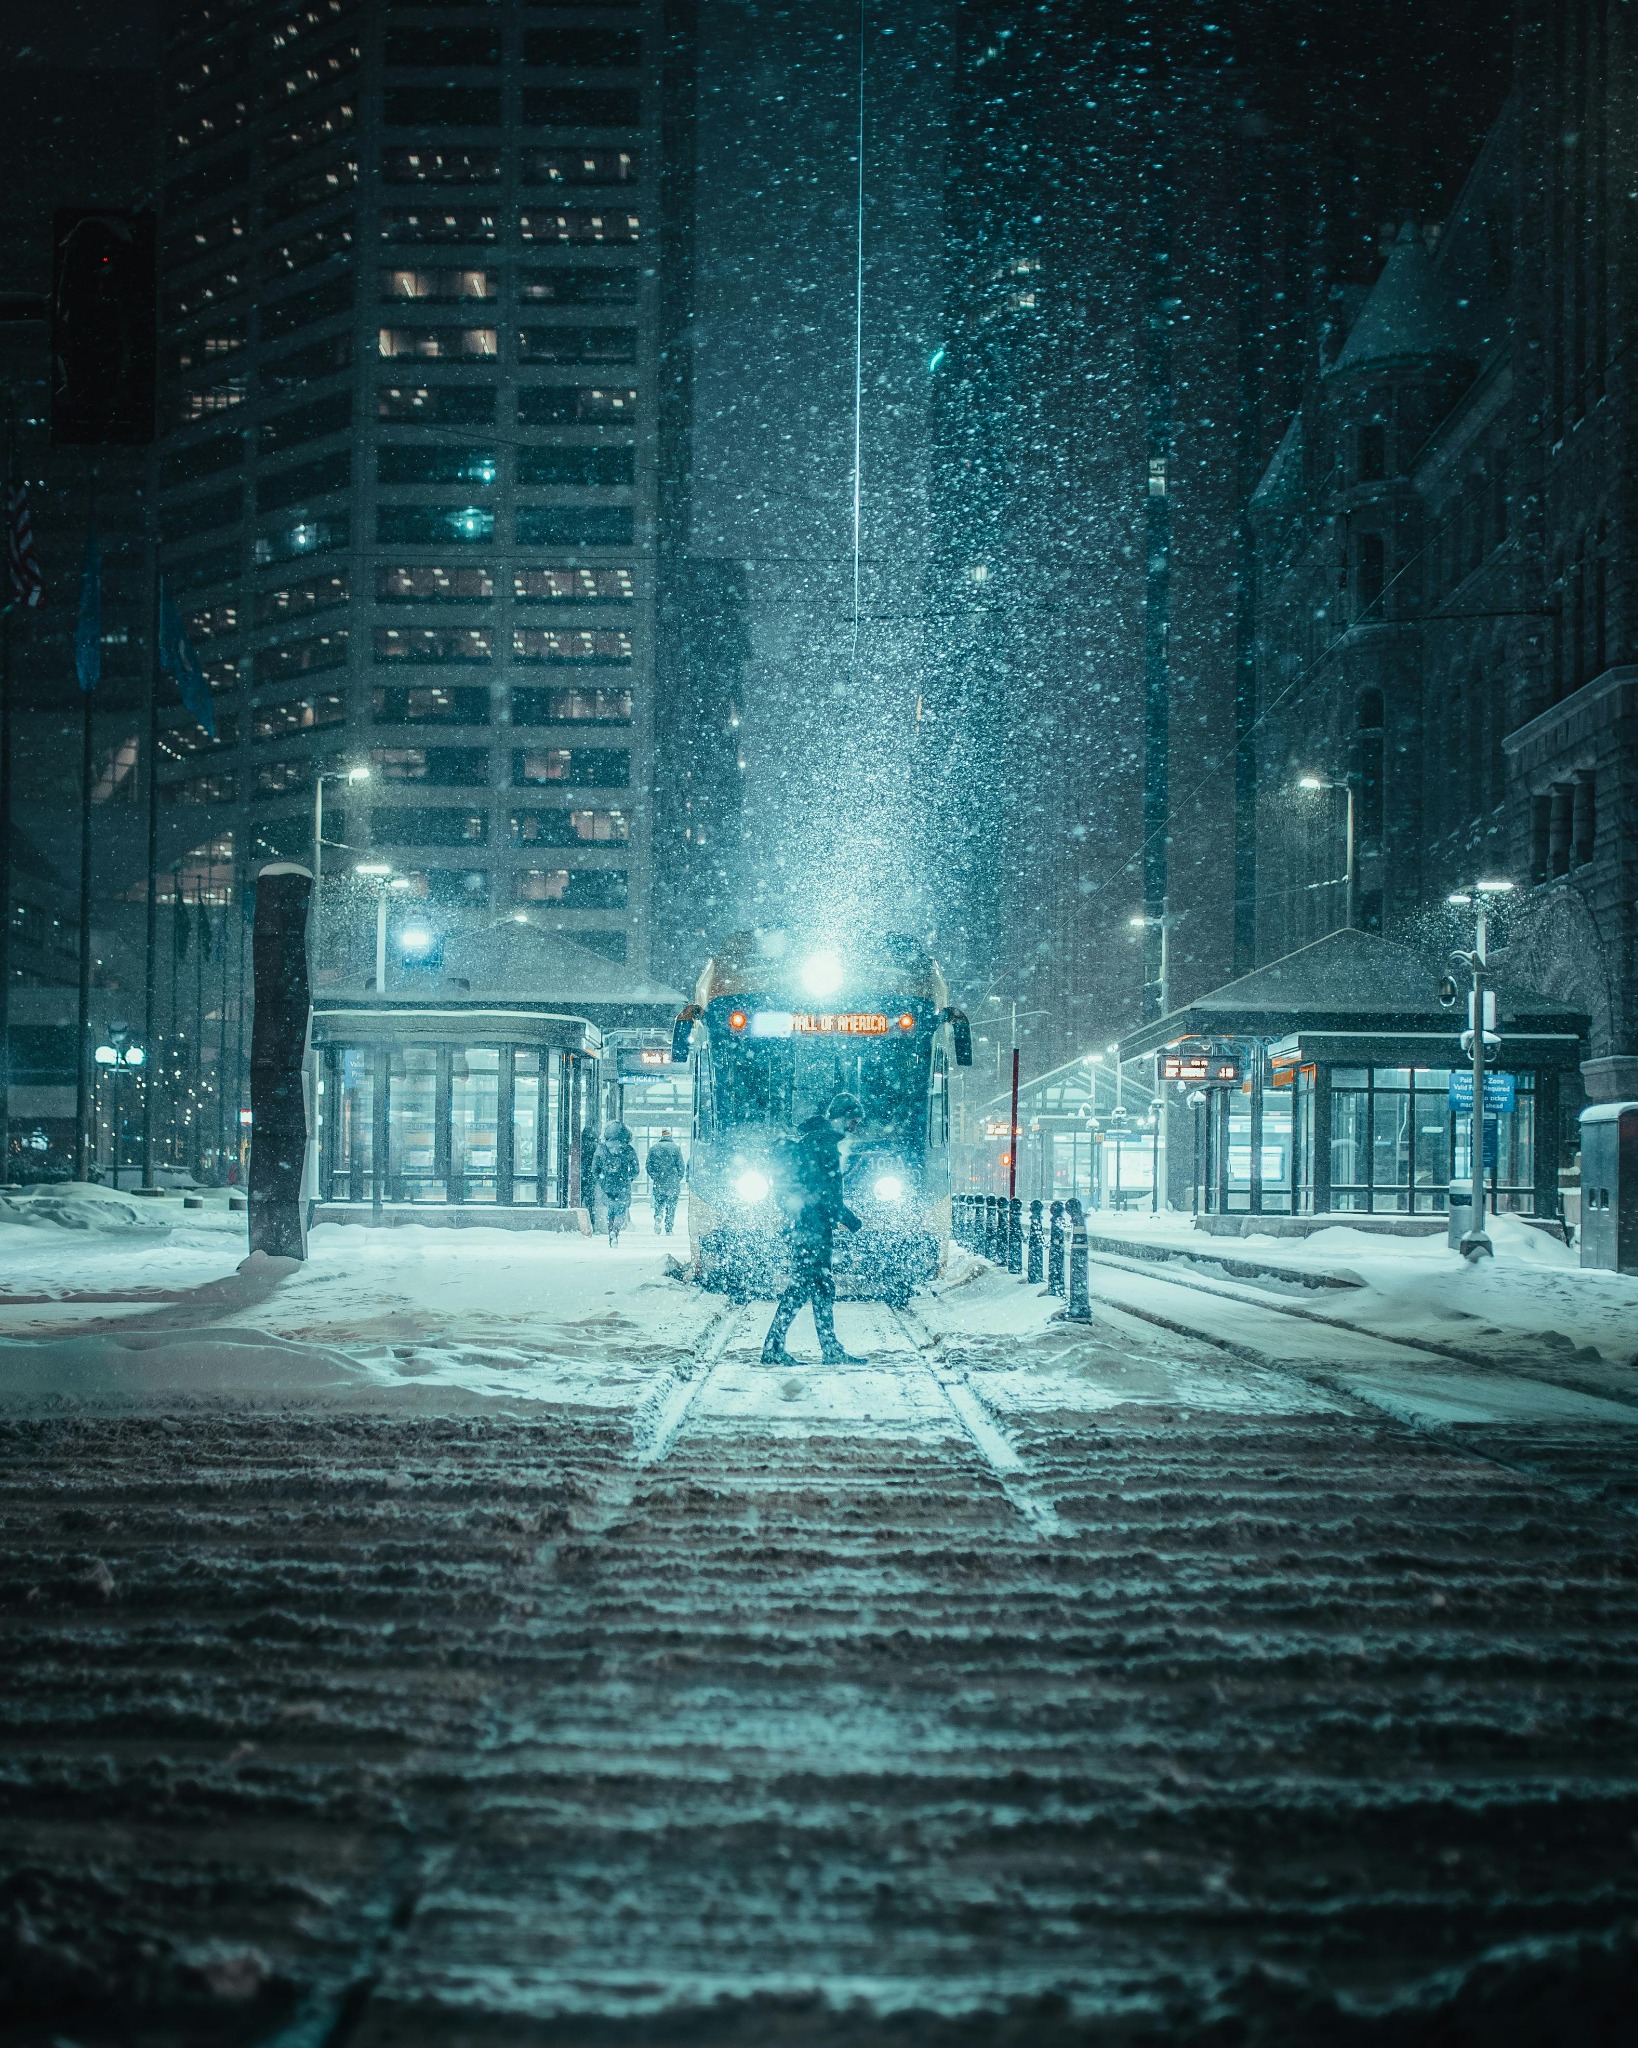 Snowy streetcar night